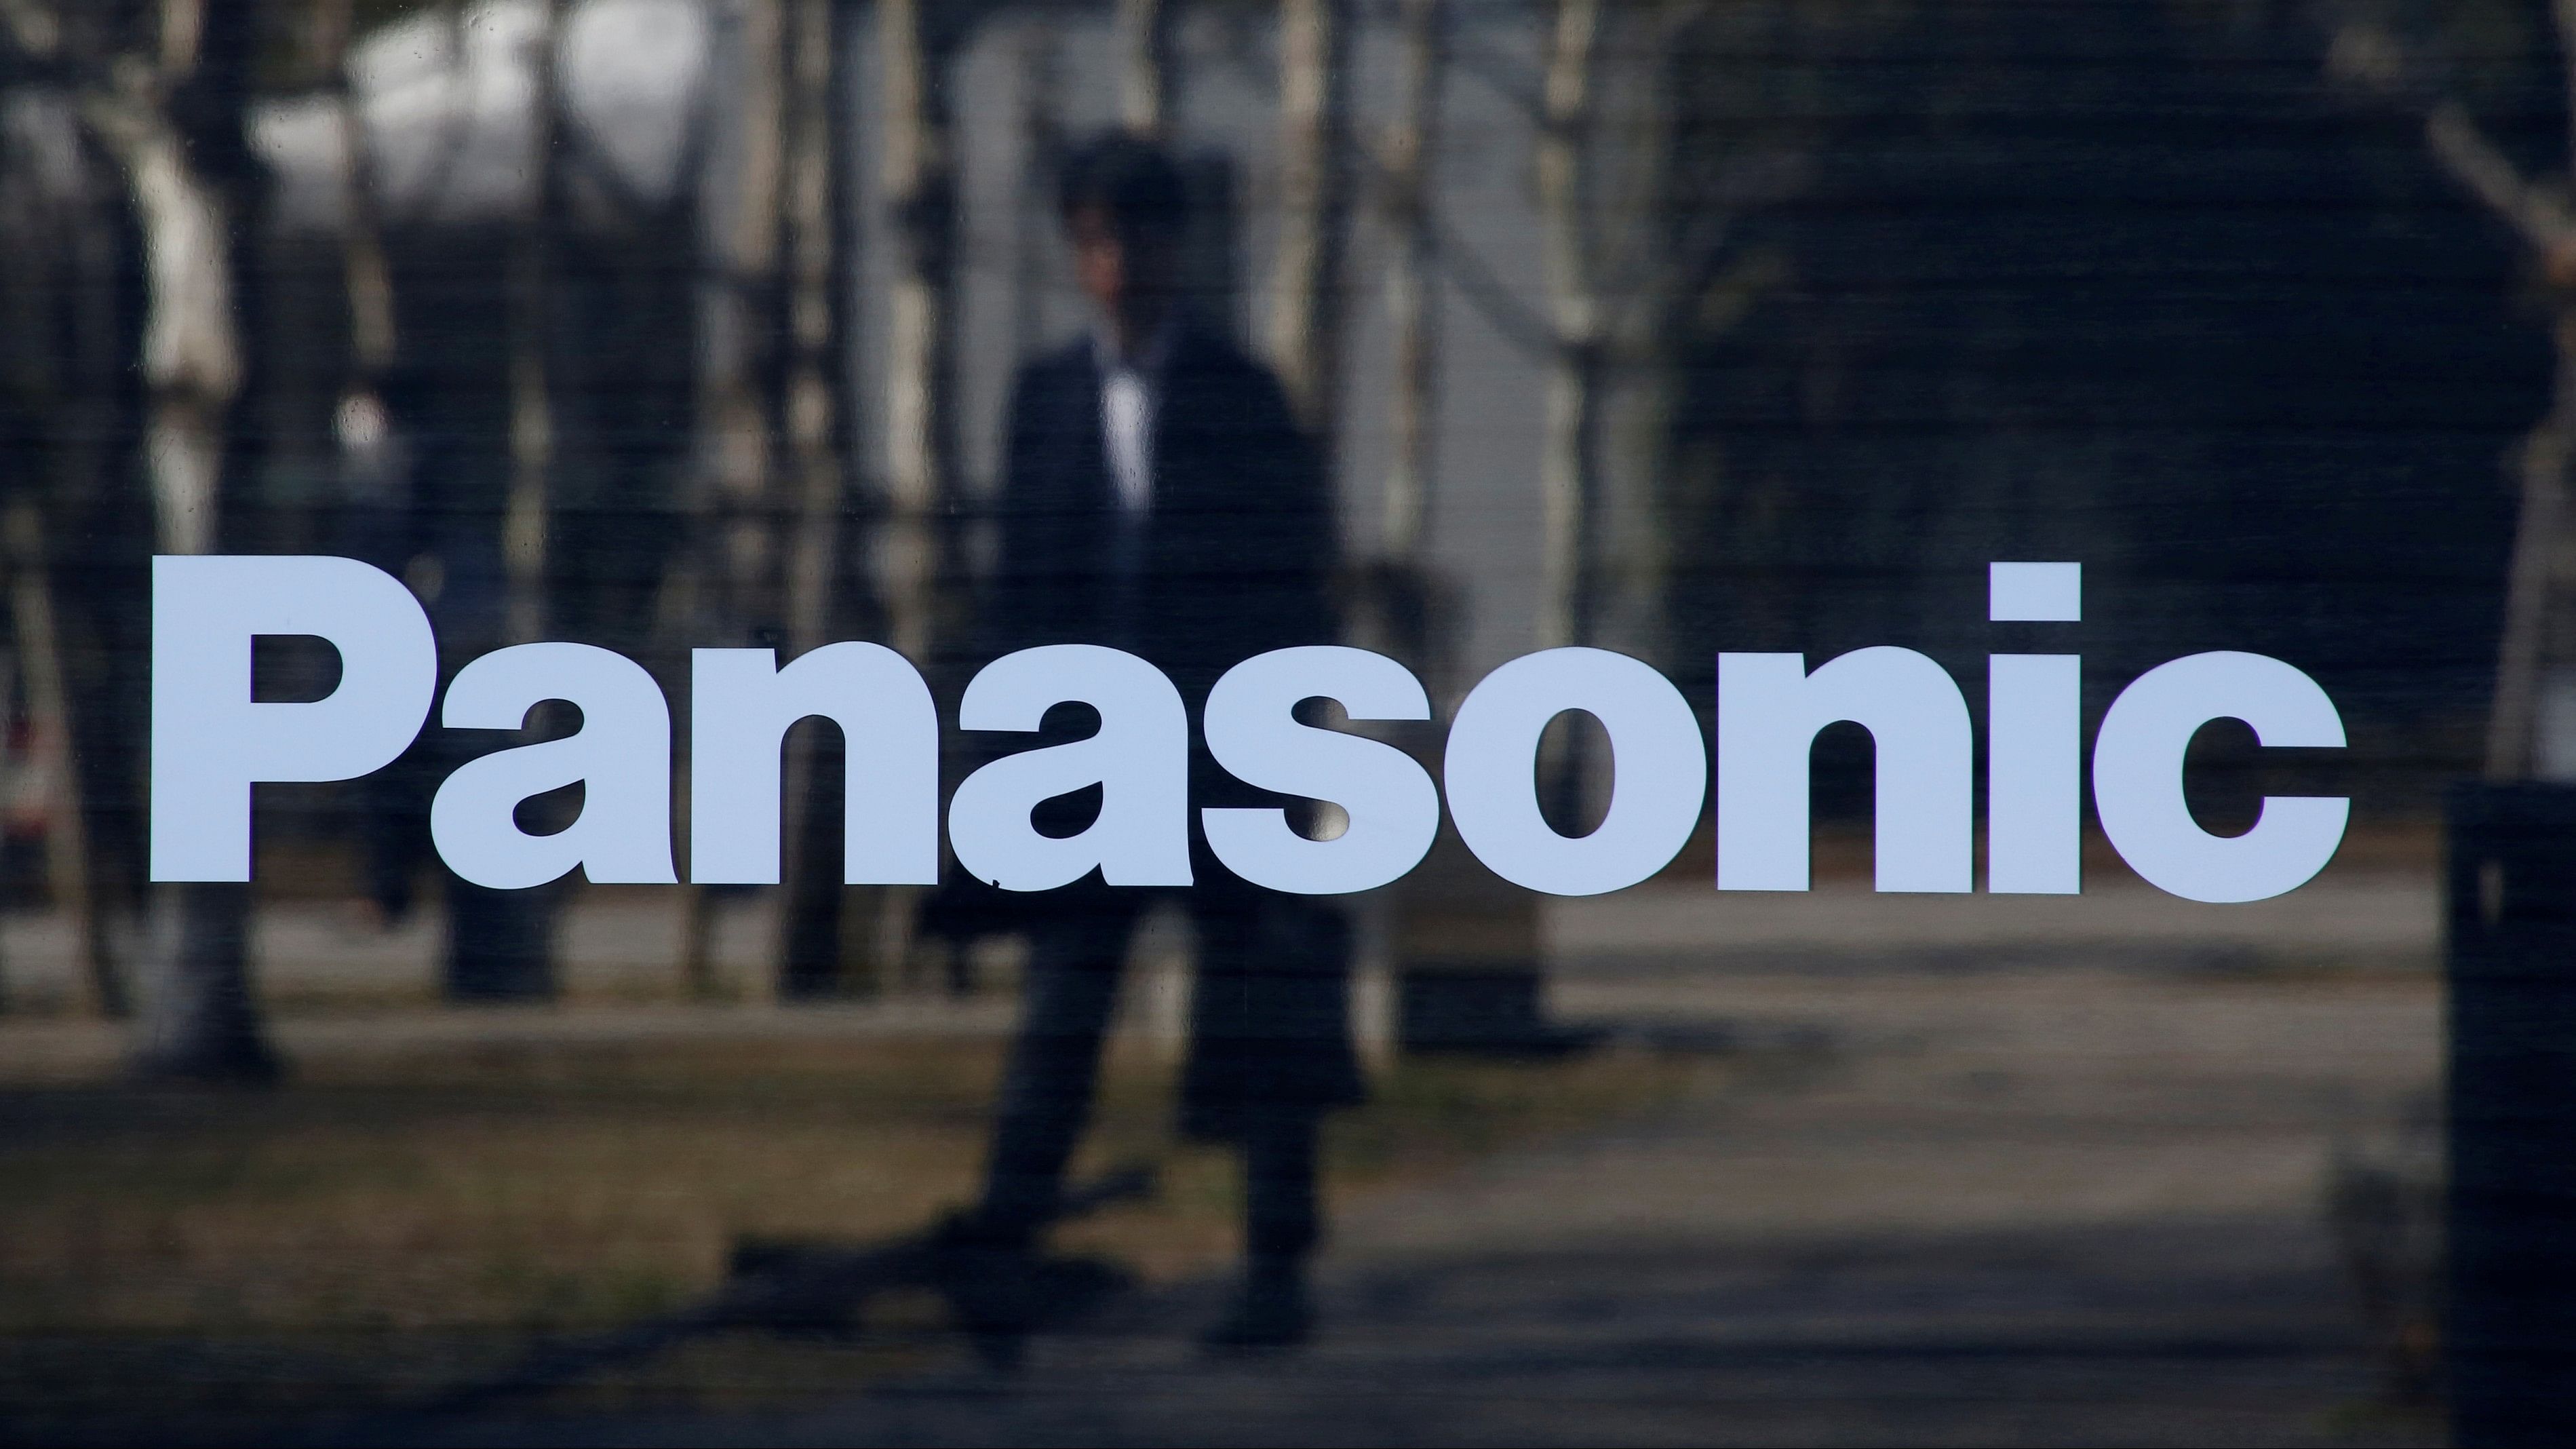 <div class="paragraphs"><p>Panasonic Corp's logo at Panasonic Center in Tokyo, Japan.</p></div>